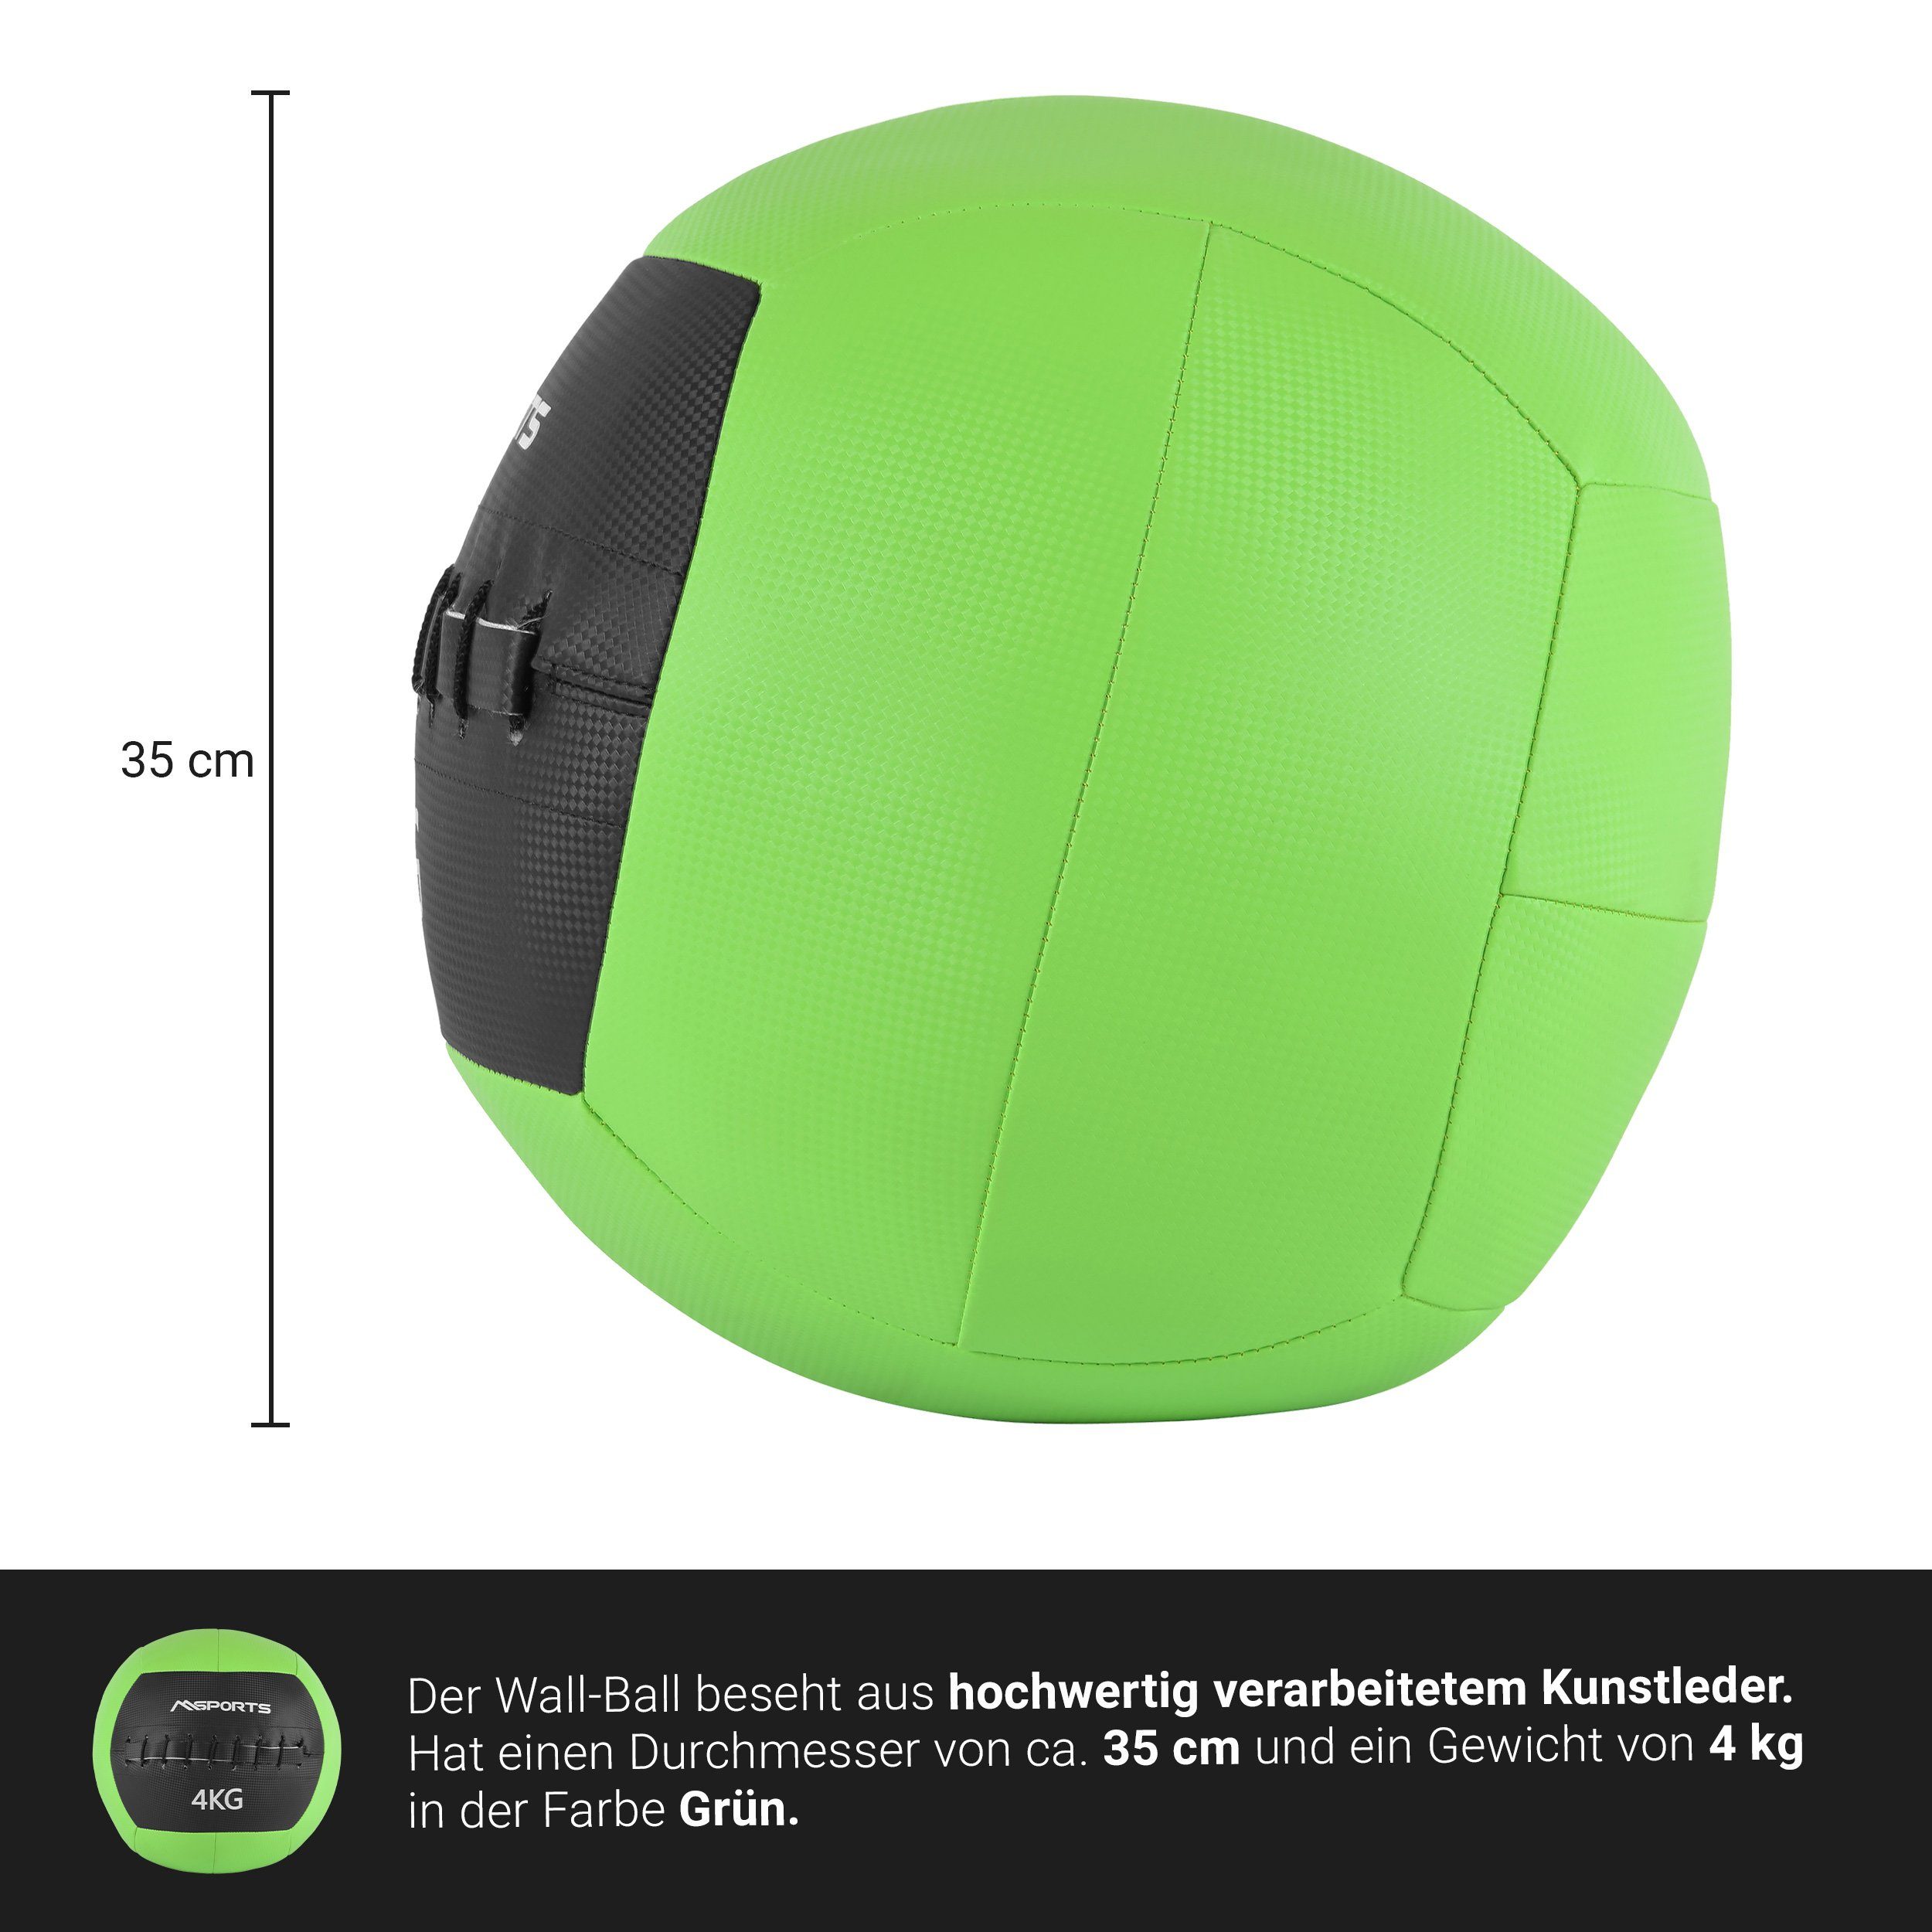 2 4 Gewichtsball verschiedenen Medizinball MSports® kg Farben - Grün Premium Wall-Ball 10 kg - in